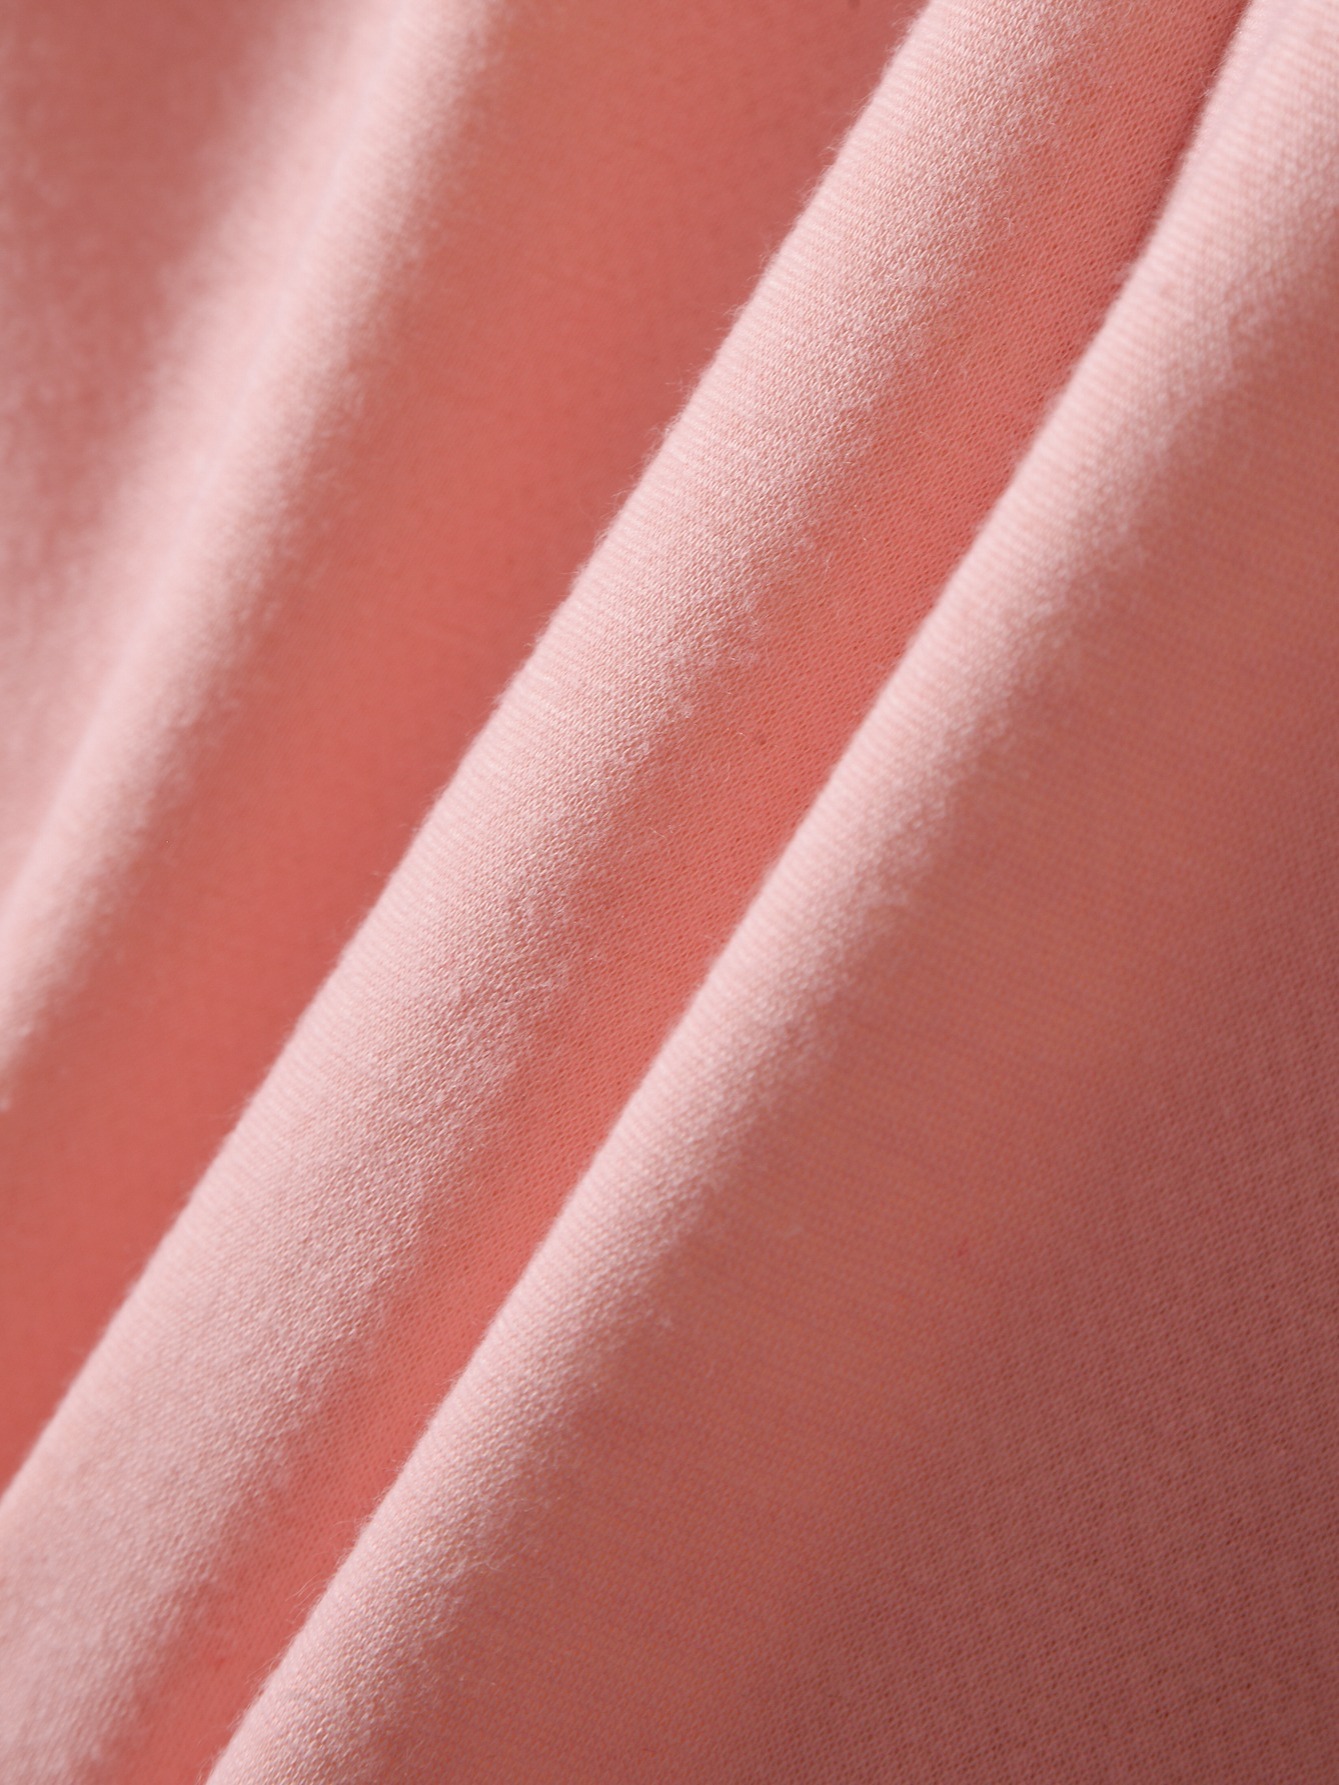 solid drawstring thermal sweatpants versatile loose comfy jogger pants womens clothing details 34